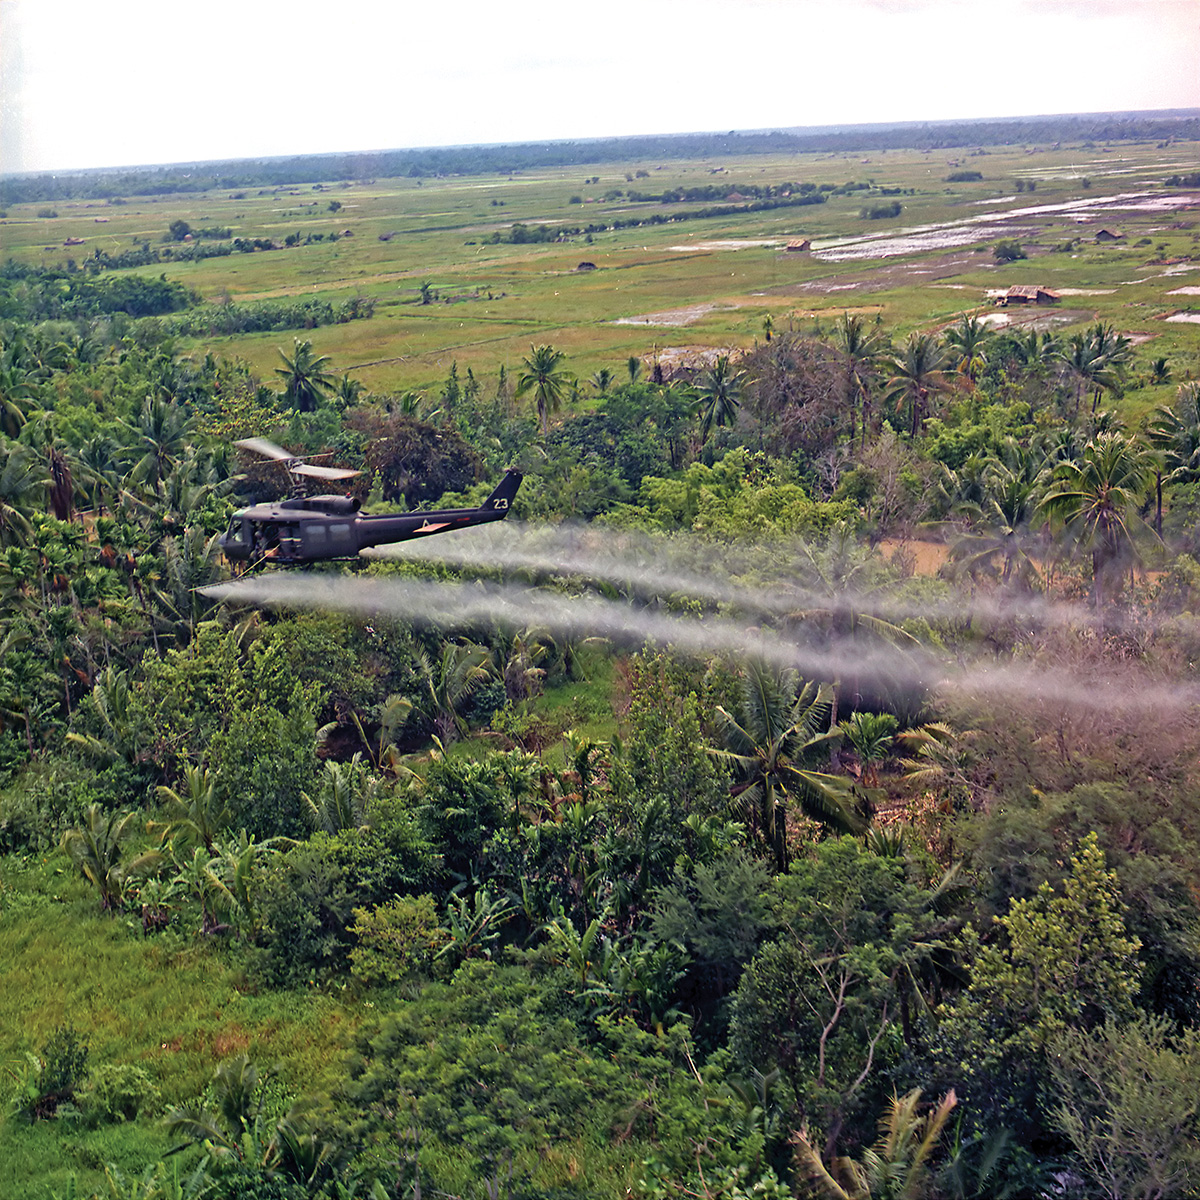 Helicopter spray mission during war in Vietnam